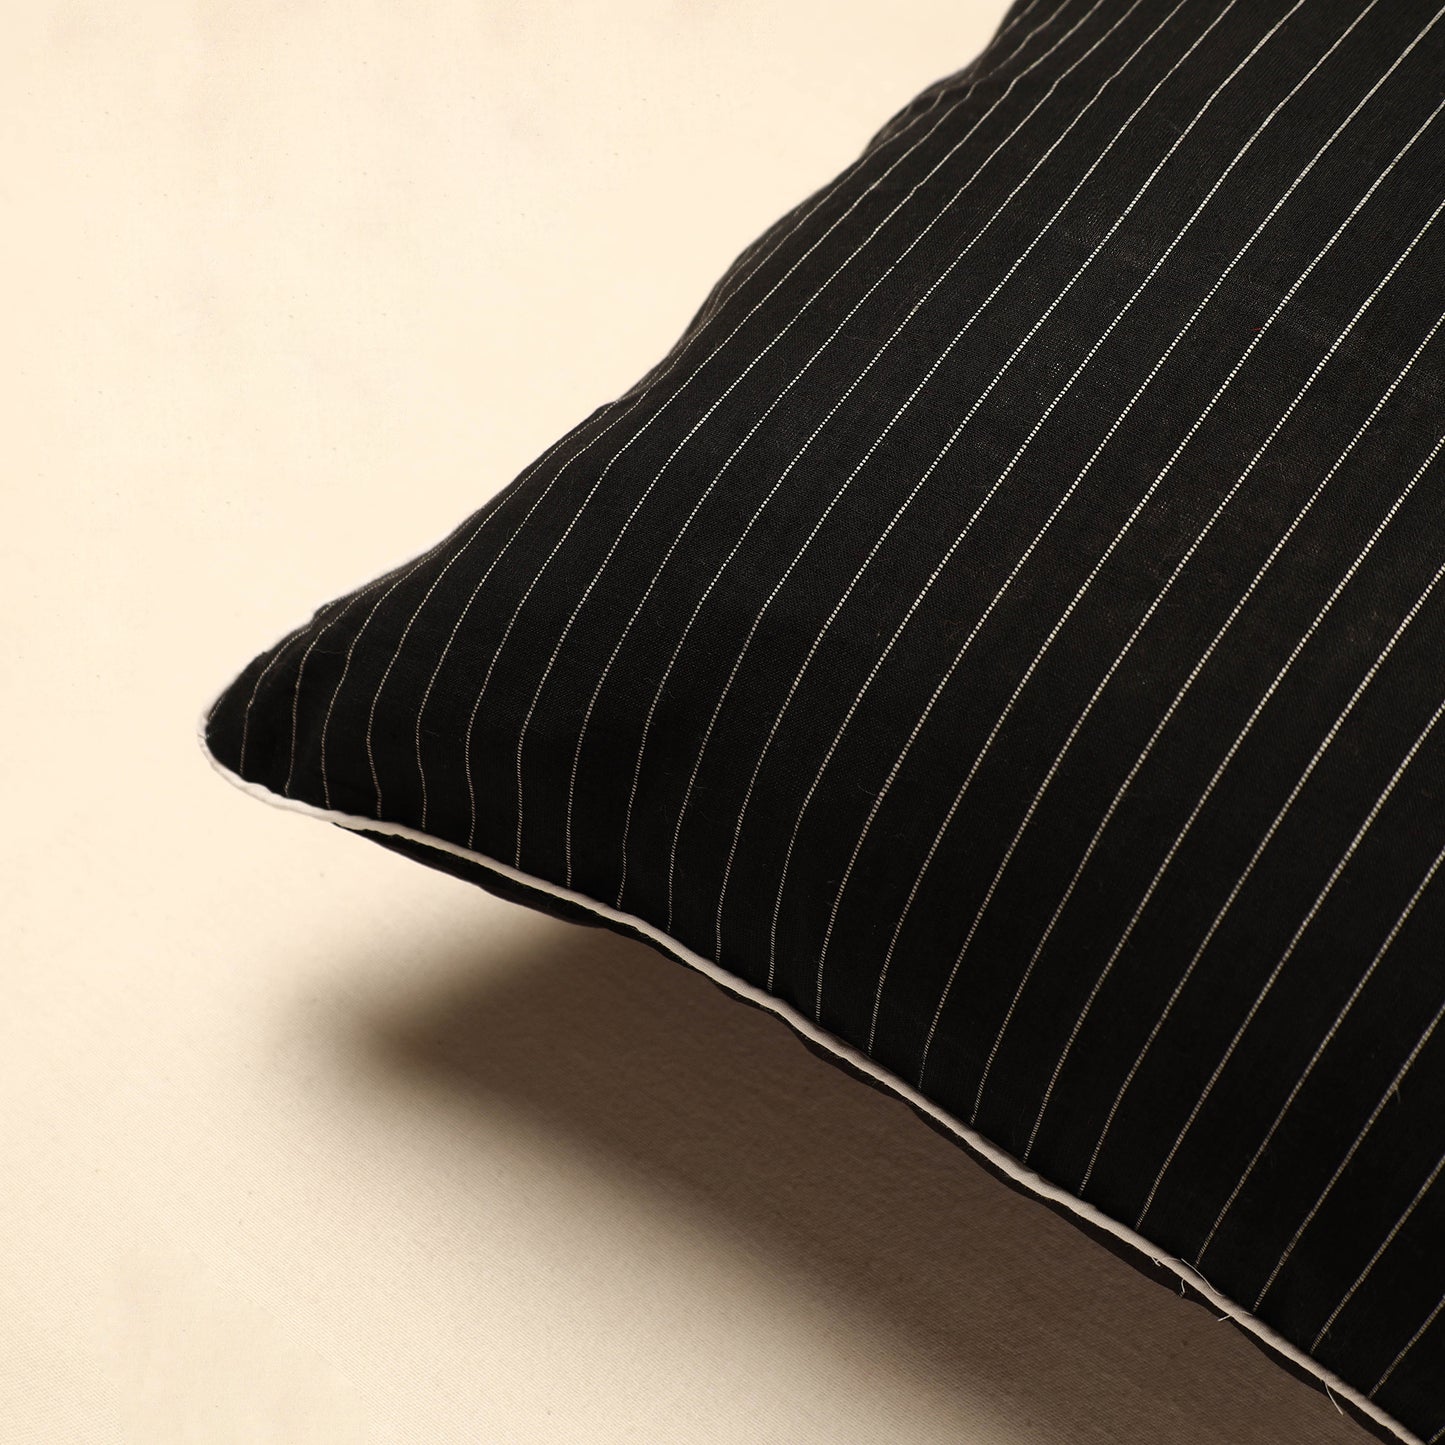 Black - Jacquard Cotton Cushion Cover (16 x 16 in)